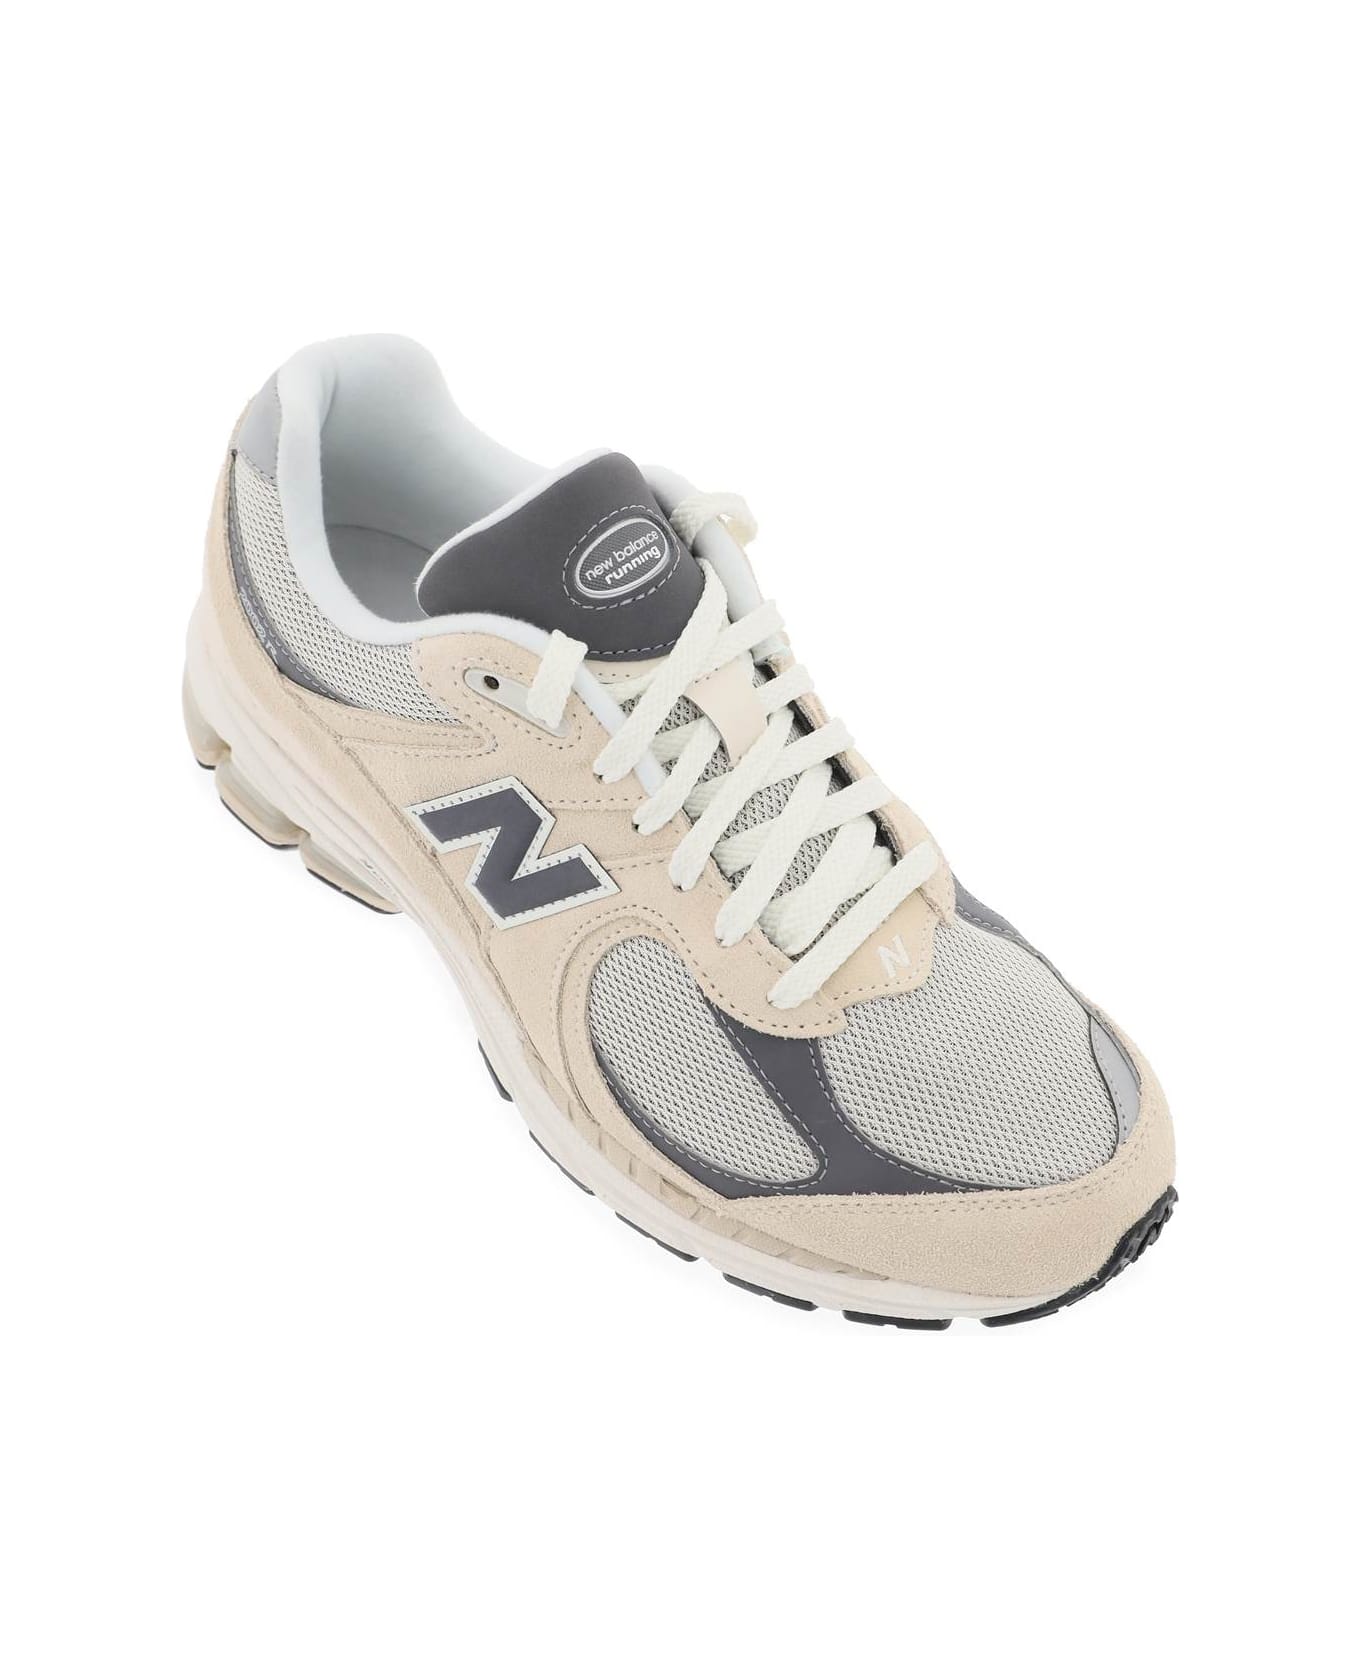 New Balance 2002r Sneakers - SANDSTONE (Grey)